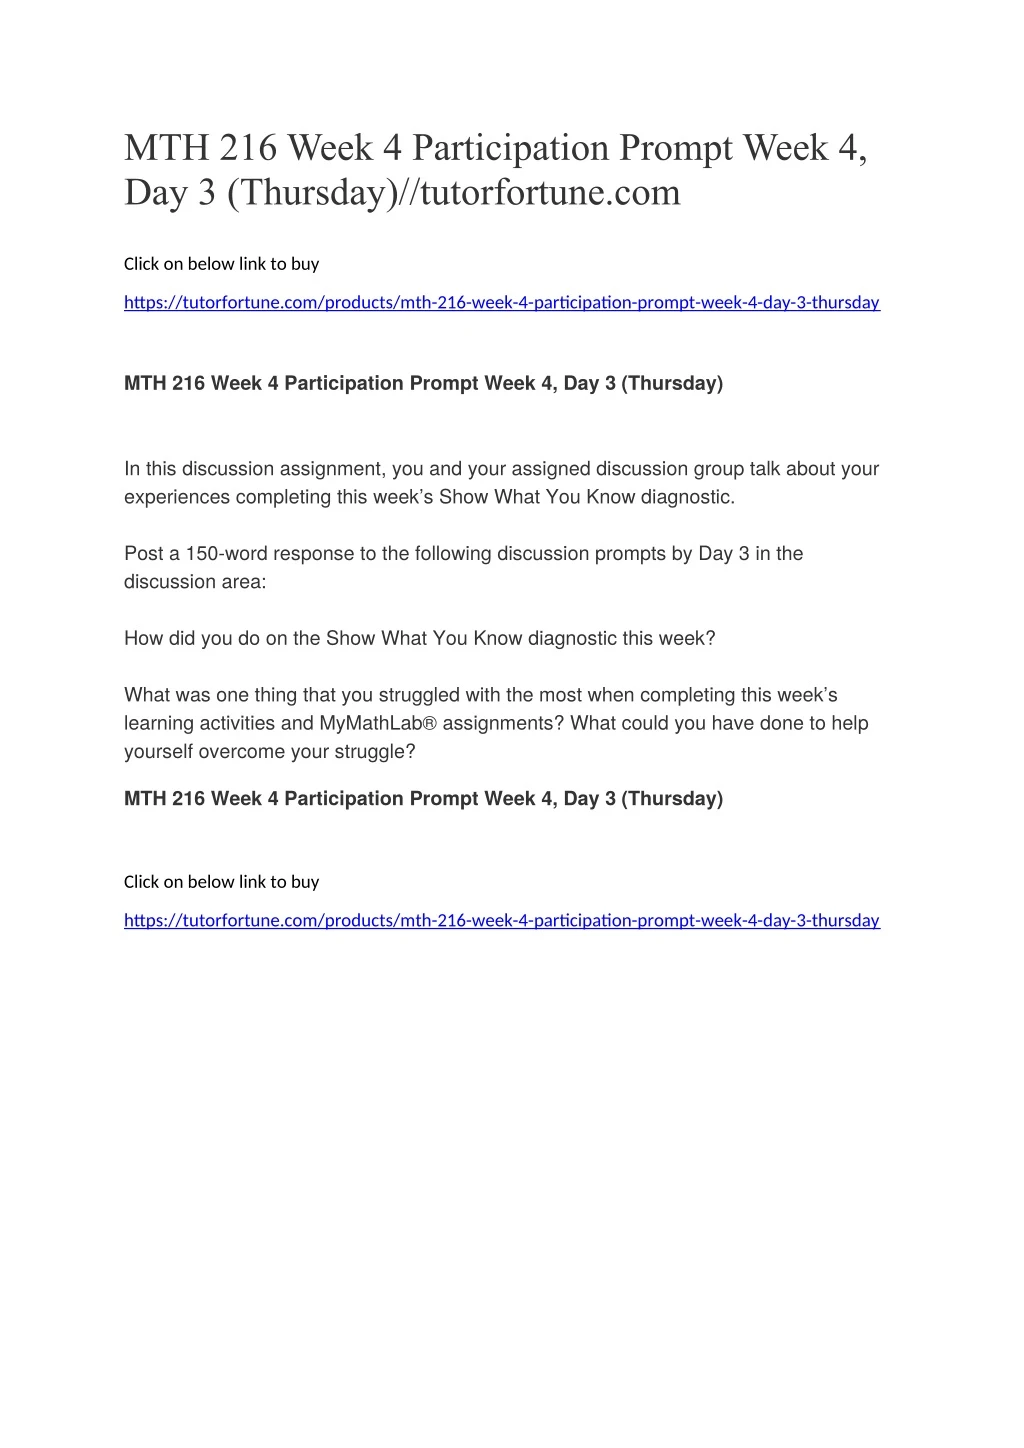 mth 216 week 4 participation prompt week